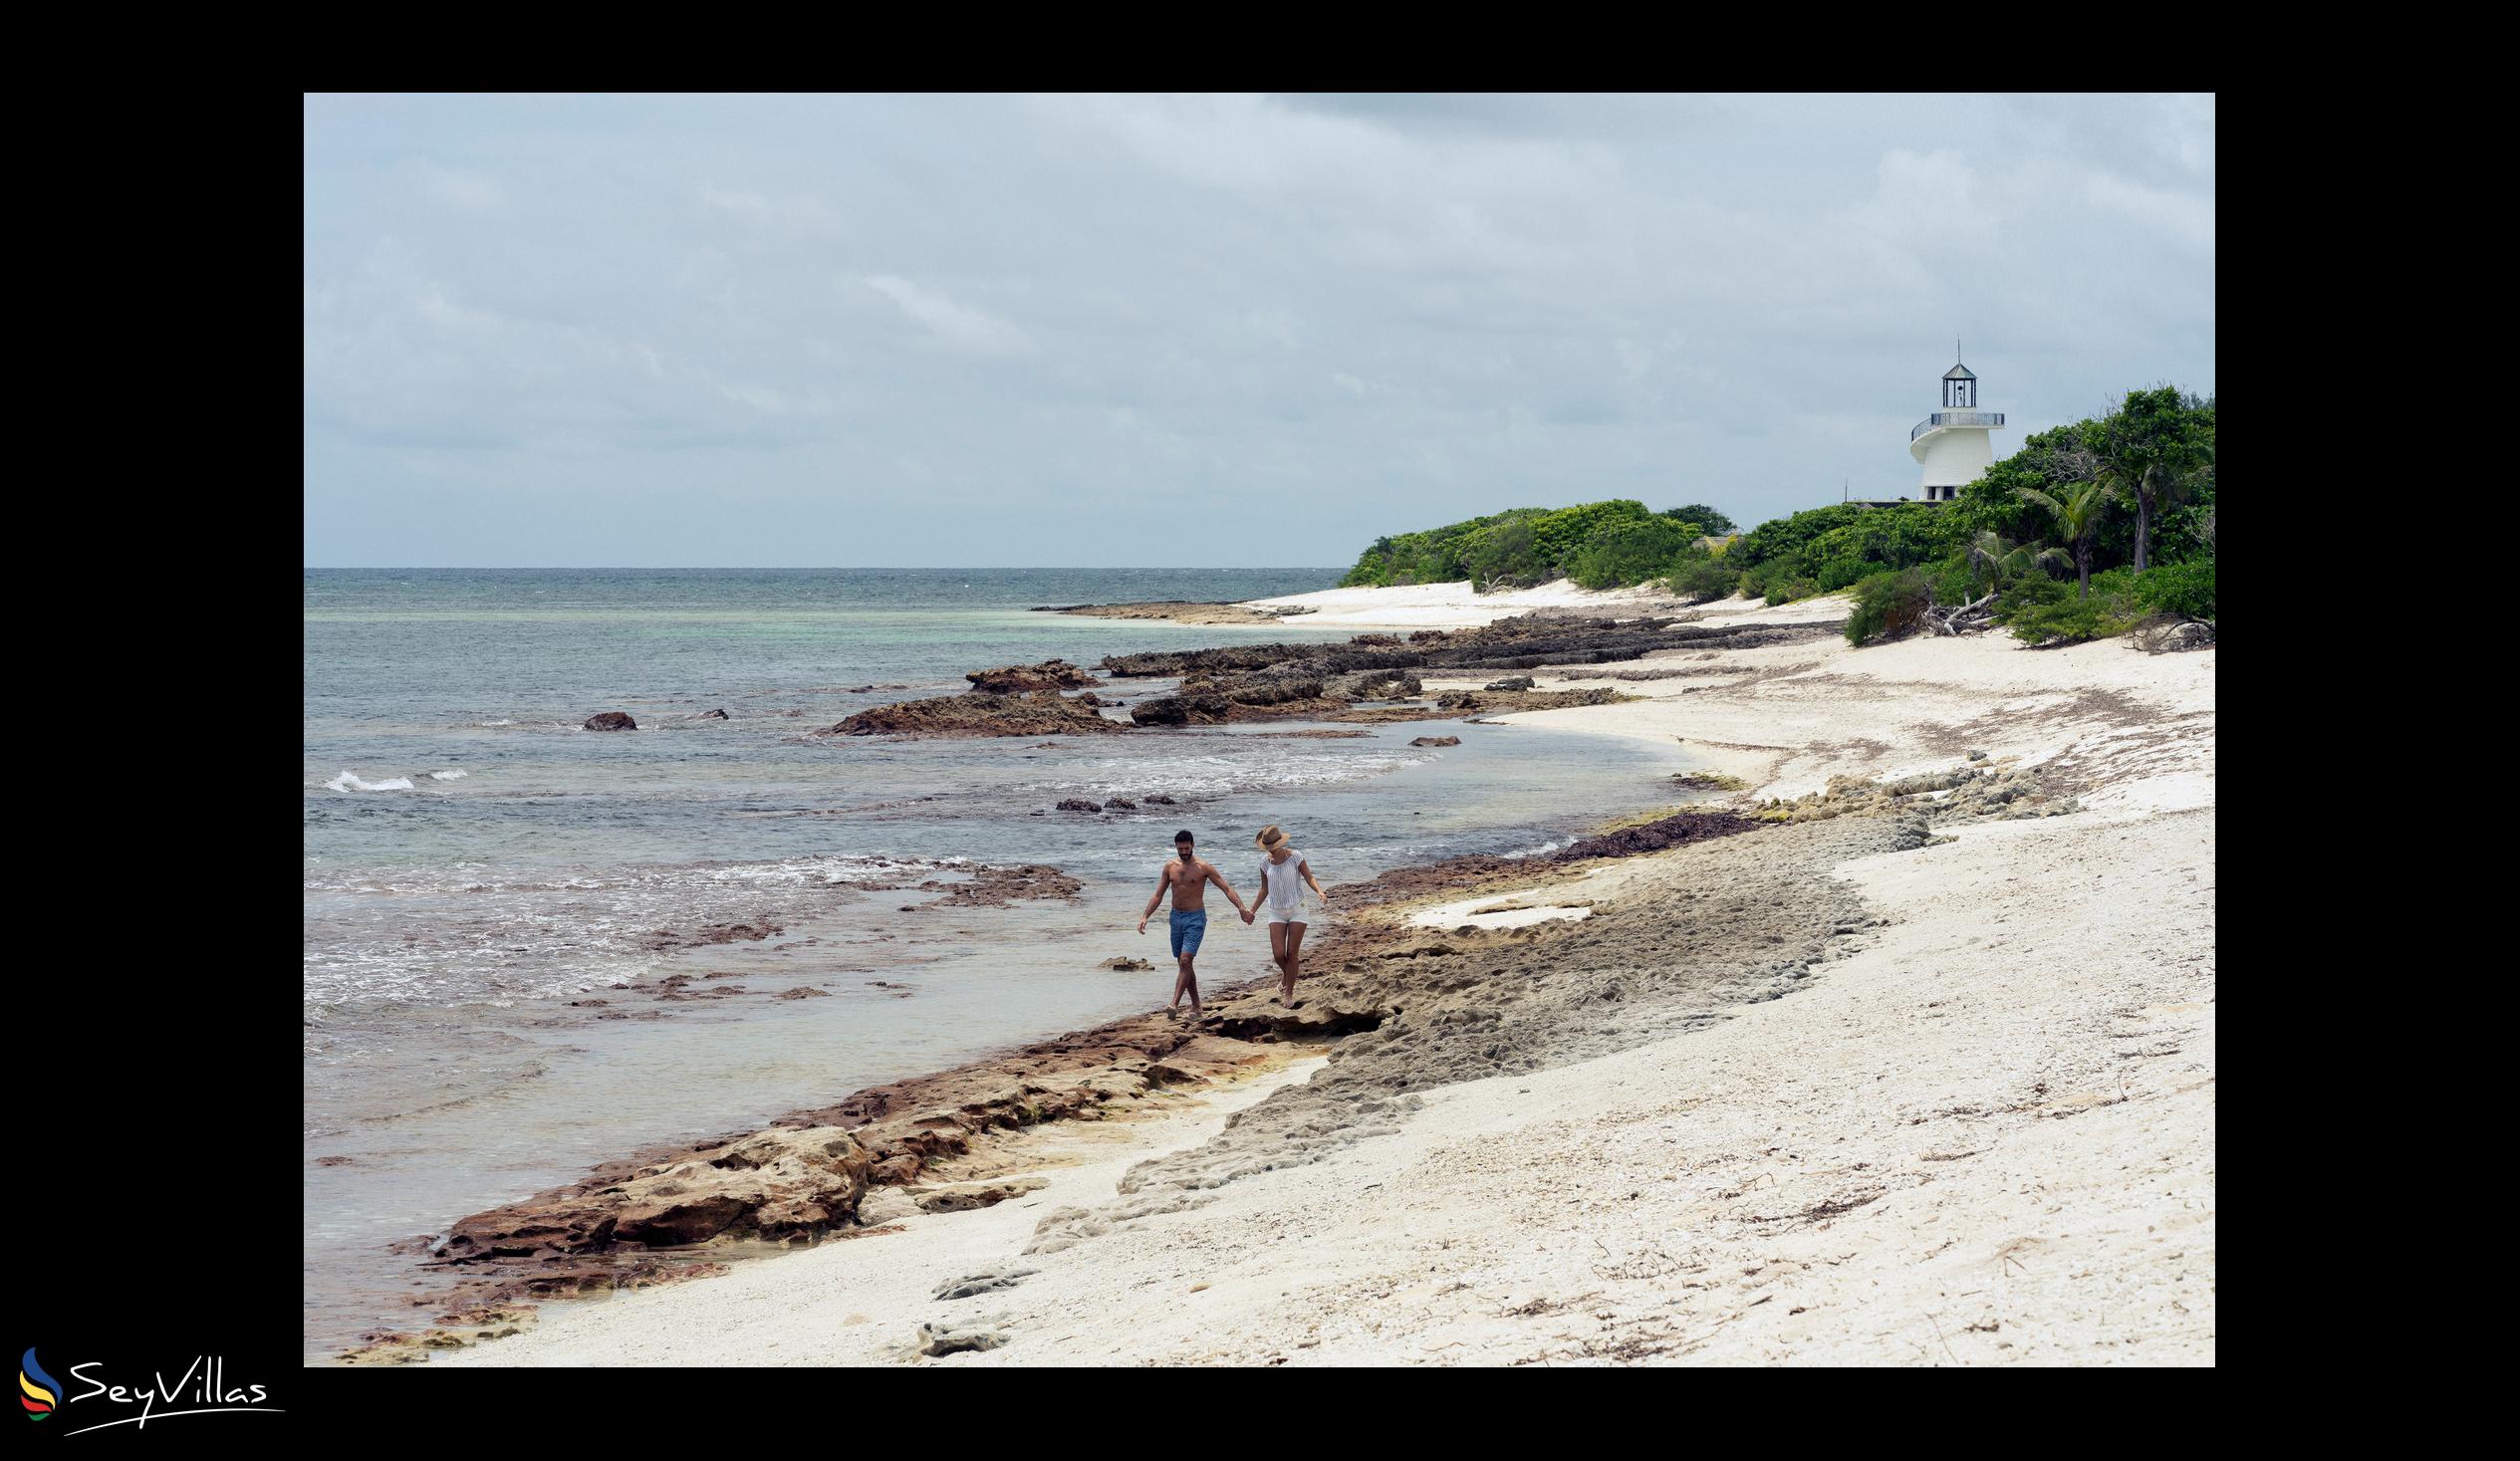 Foto 175: Four Seasons Resort Desroches Island - Location - Desroches Island (Seychelles)